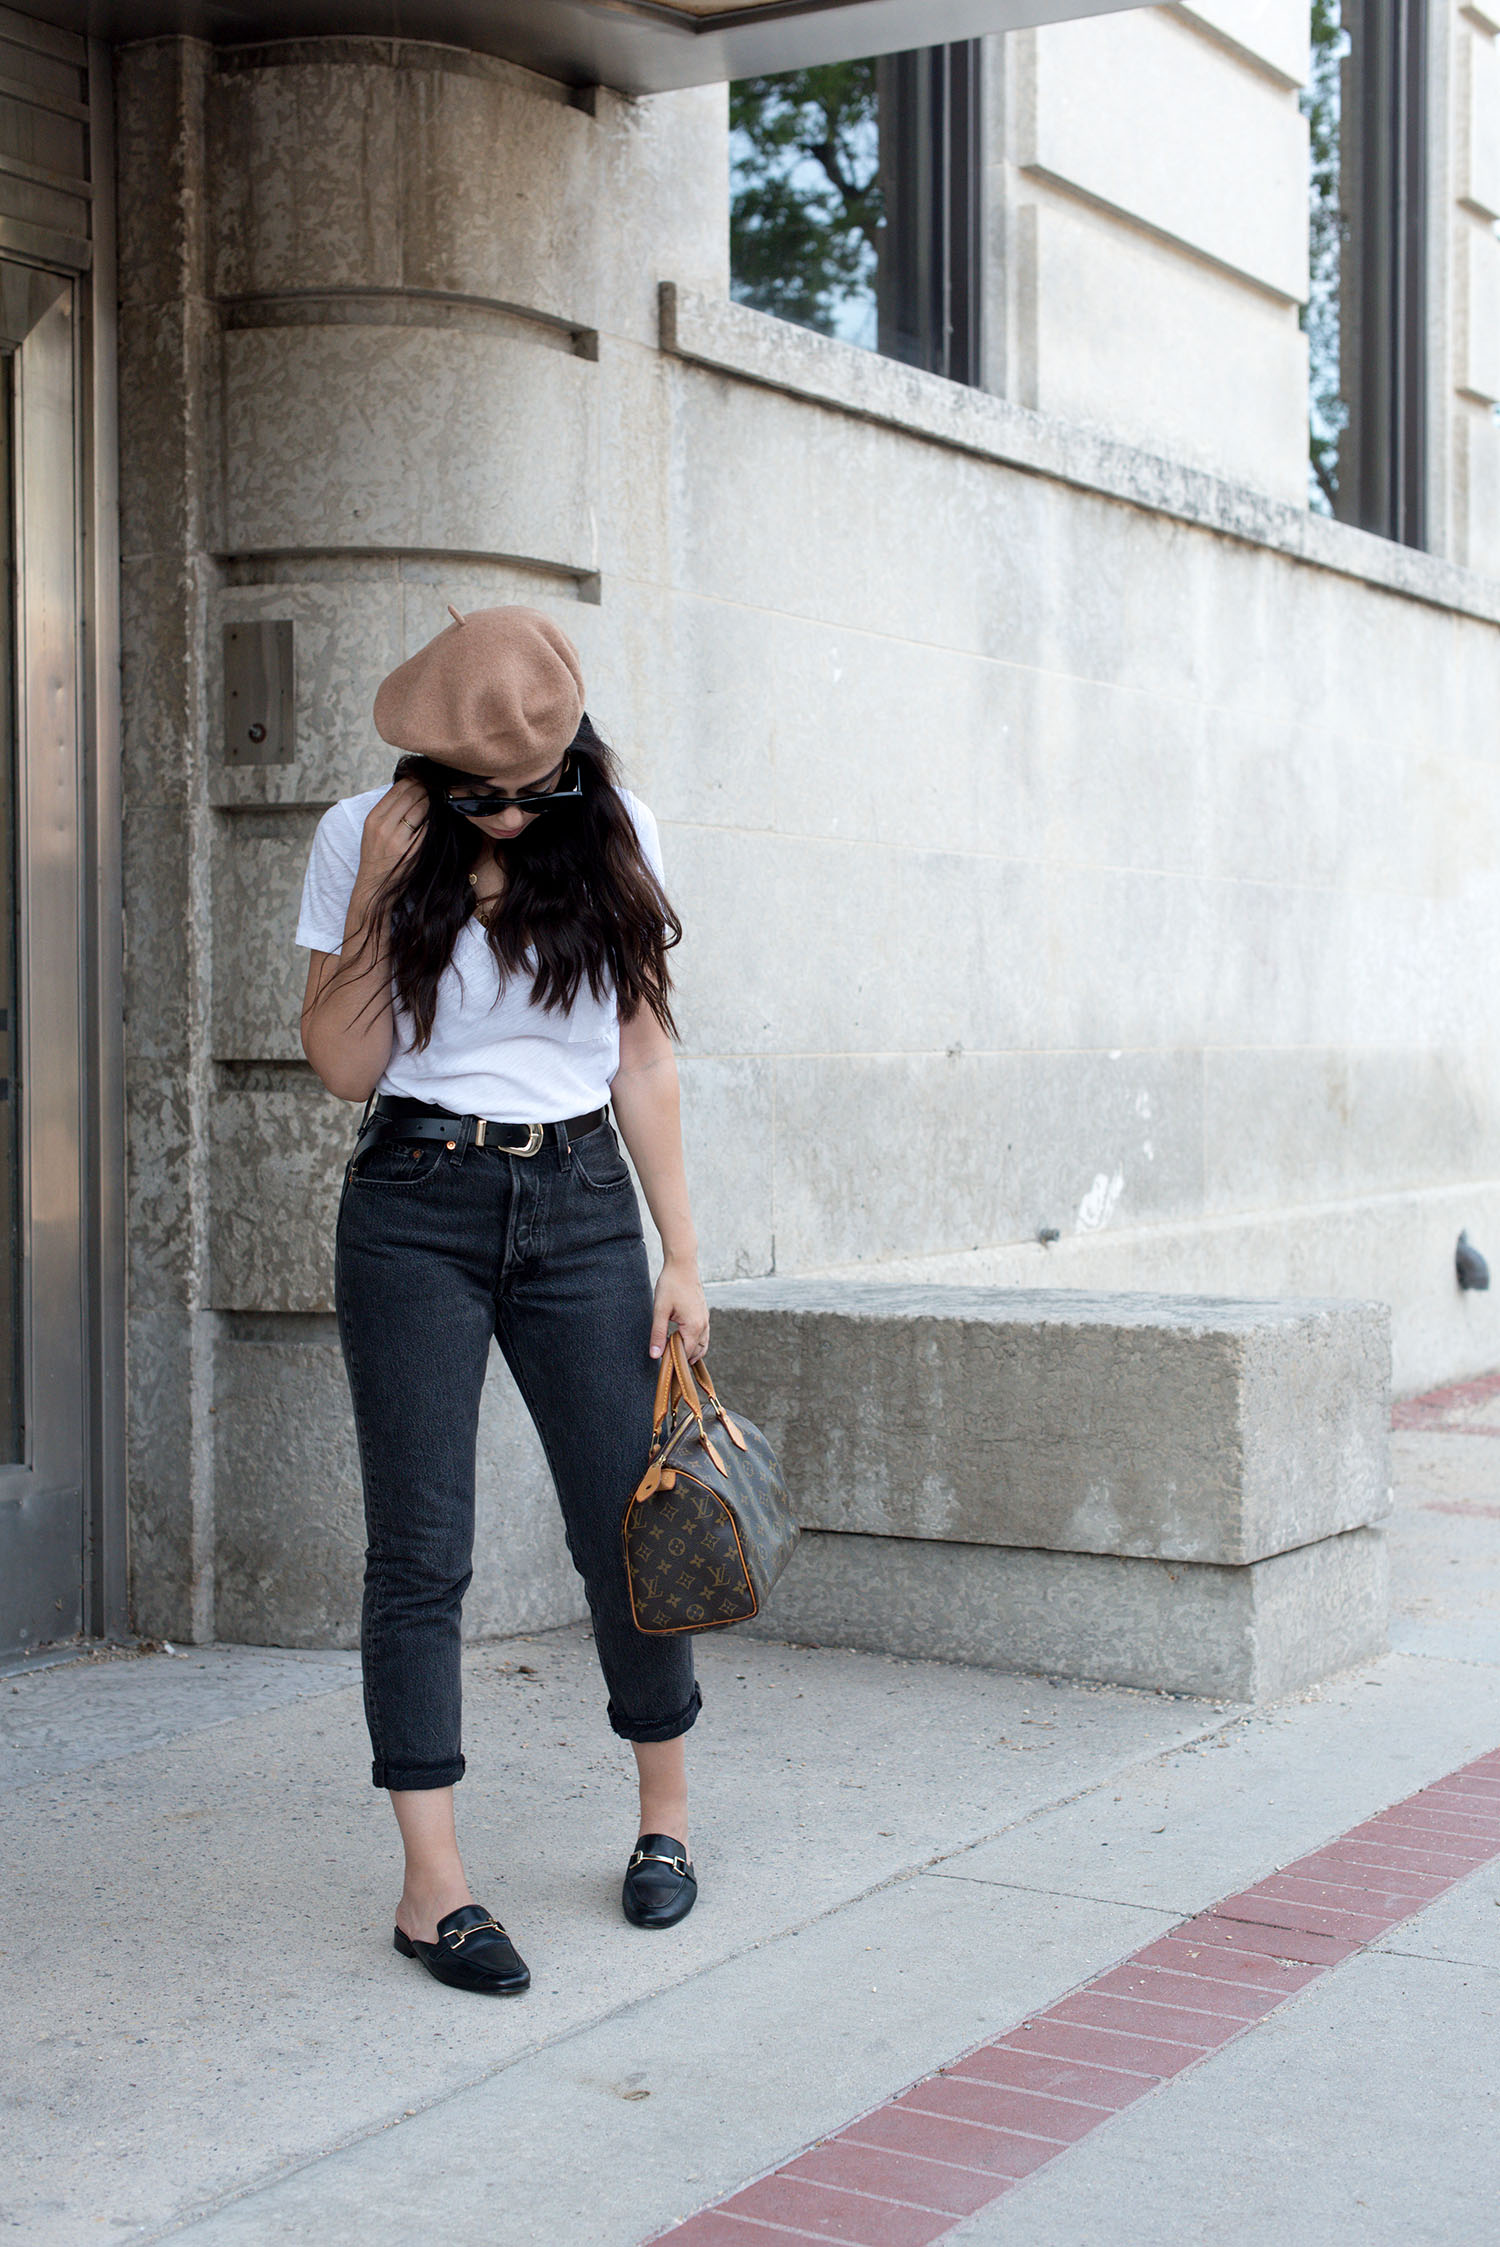 Top Winnipeg fashion blogger Cee Fardoe of Coco & Vera wears a white Madewell tee and Levi's jeans